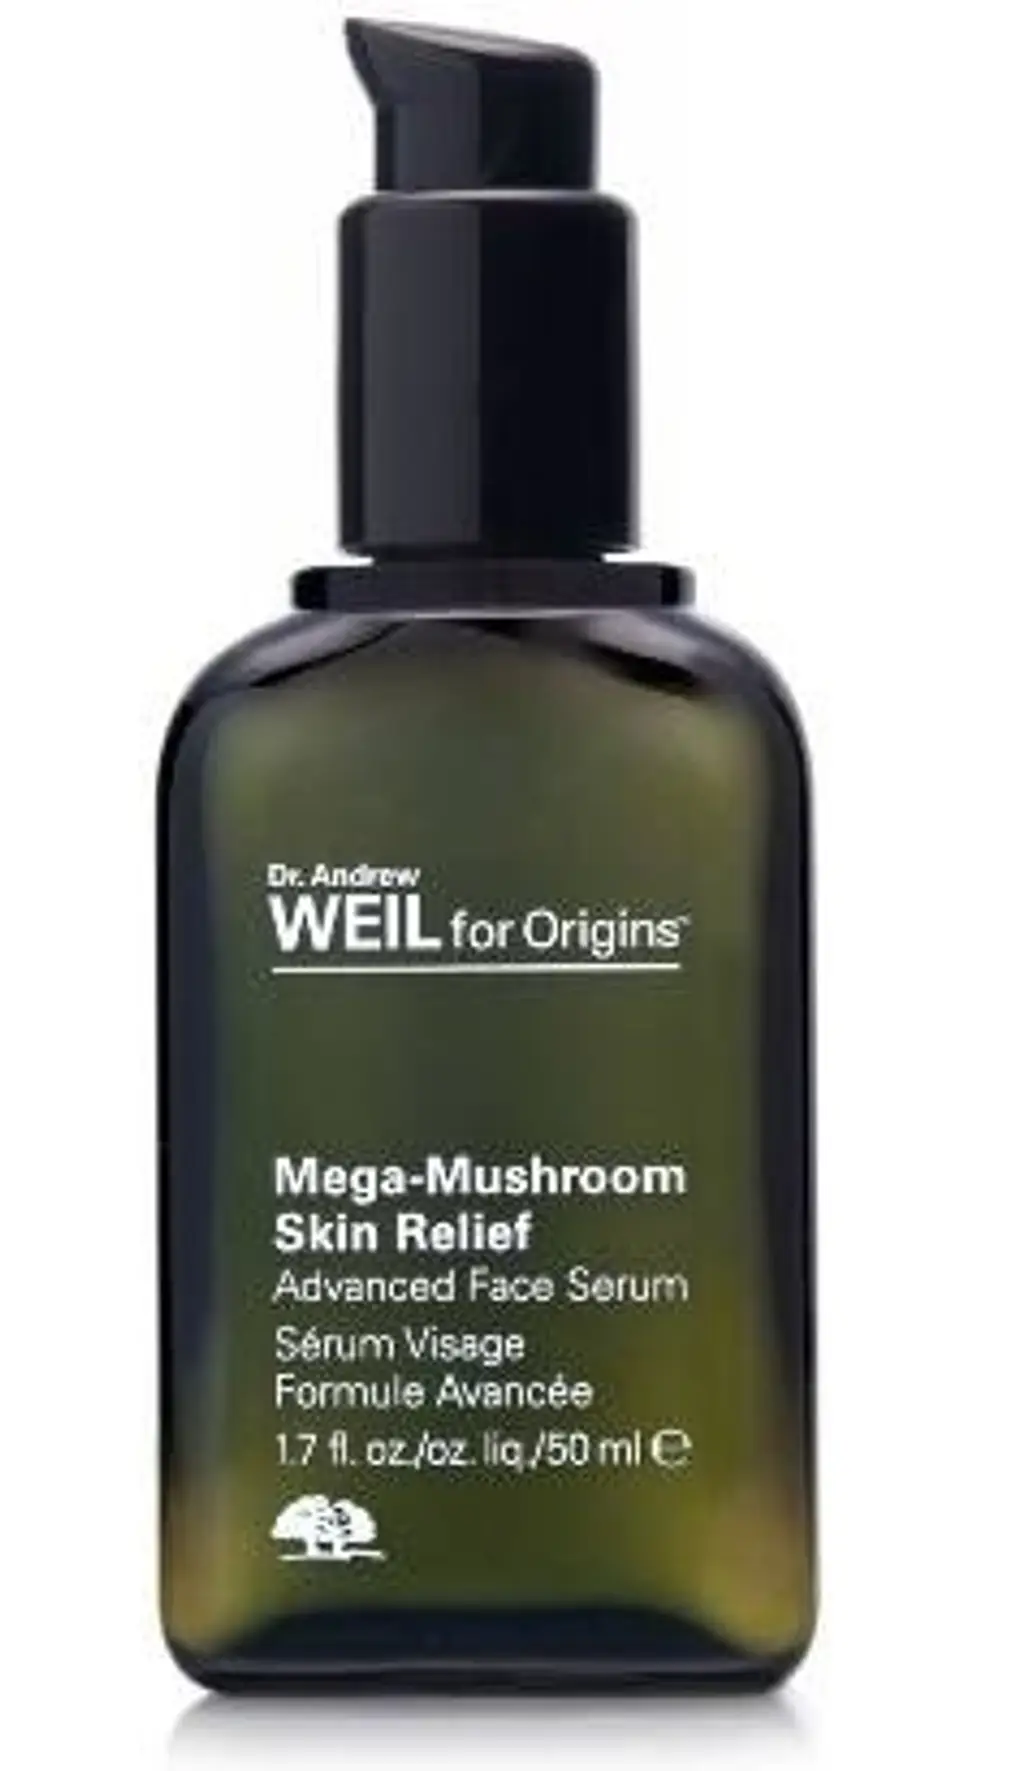 Dr. Andrew Weil for Origins Mega-Mushroom Skin Relief Advanced Face Serum